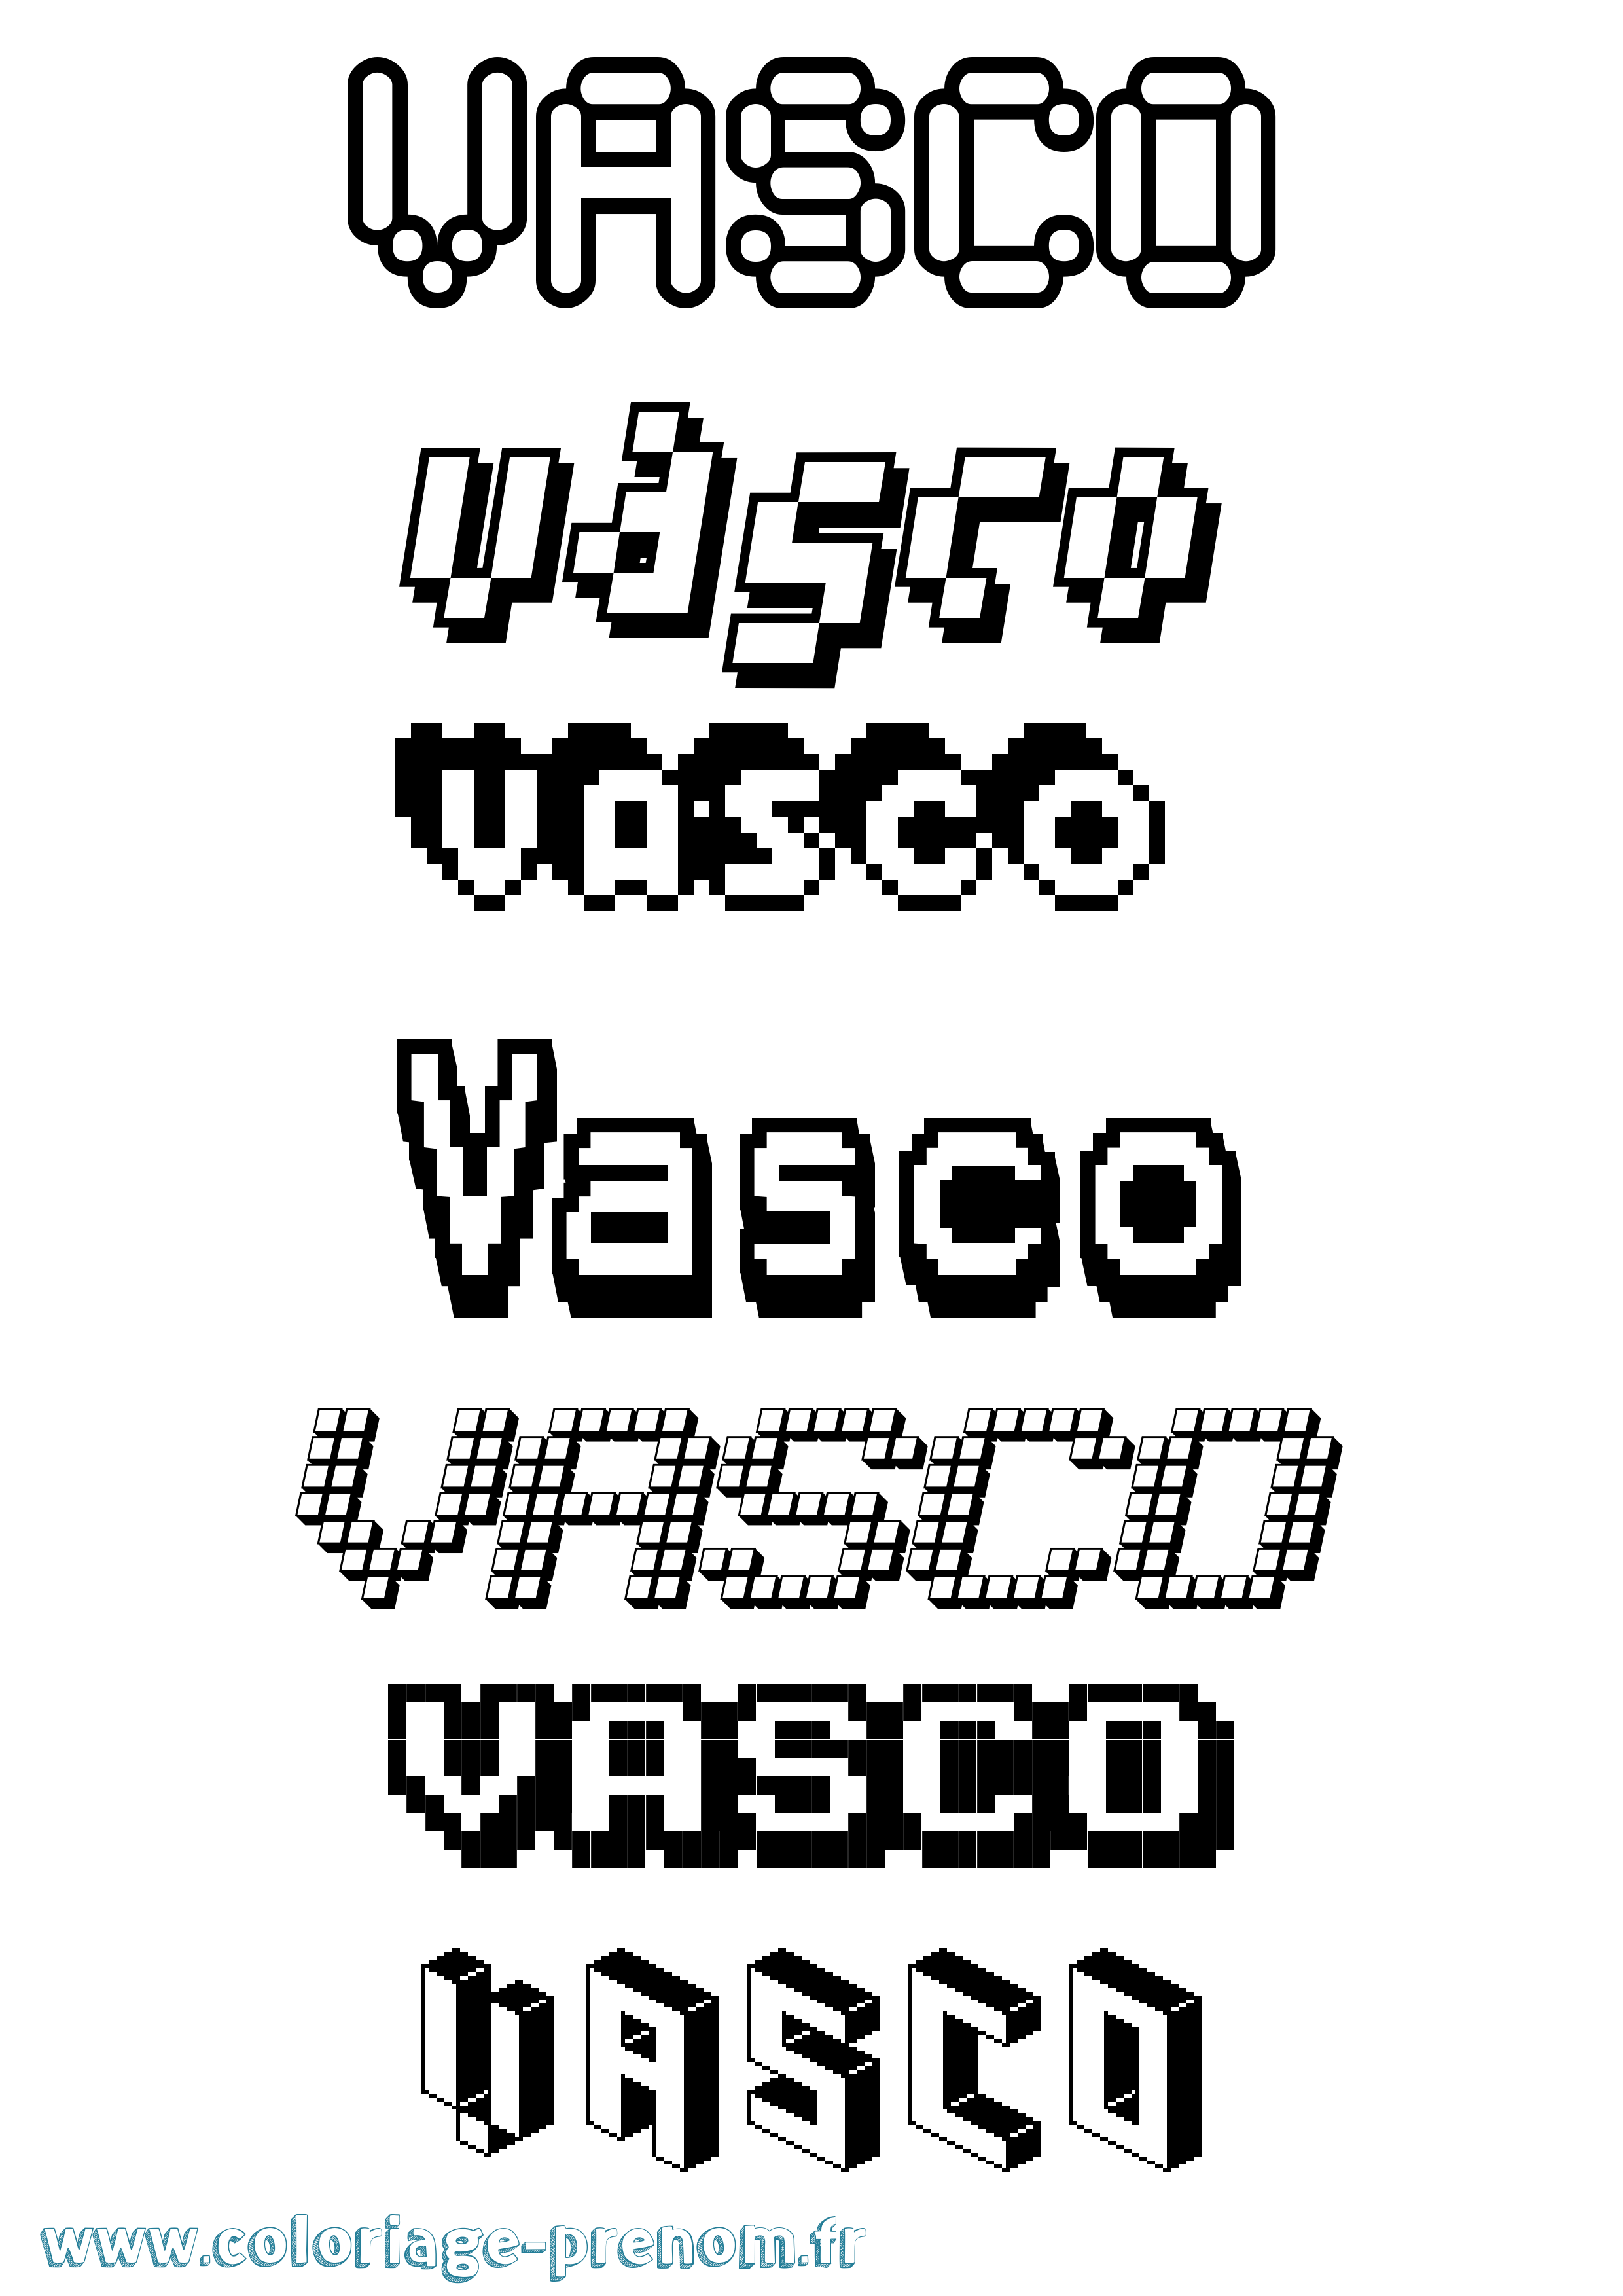 Coloriage prénom Vasco Pixel